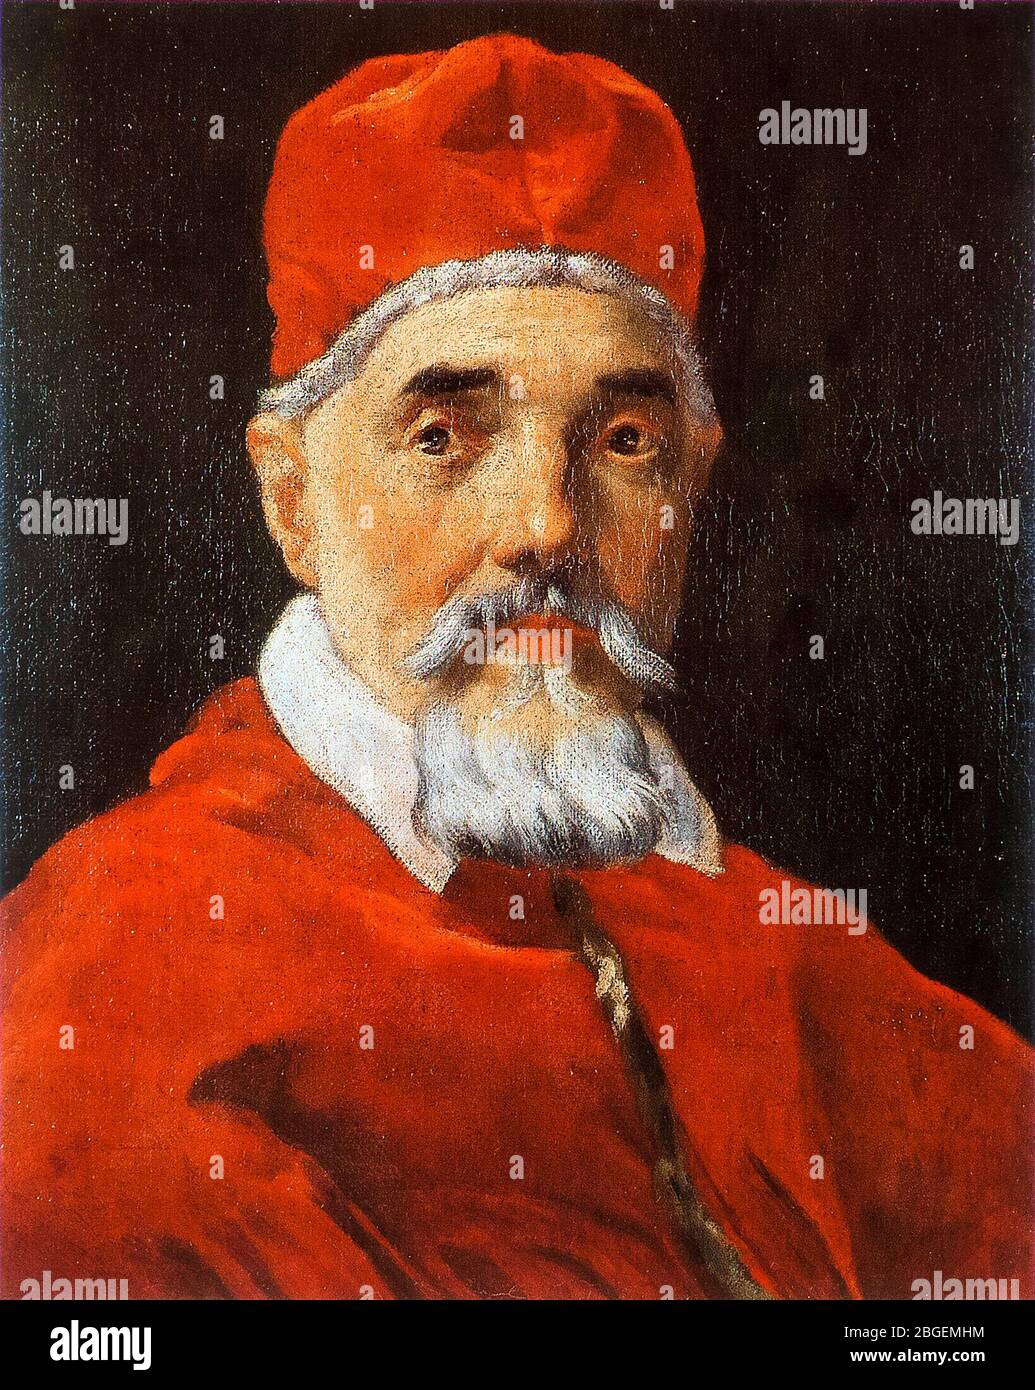 Gian Lorenzo Bernini, Pope Urban VIII (1568-1644), portrait painting, circa 1625 Stock Photo